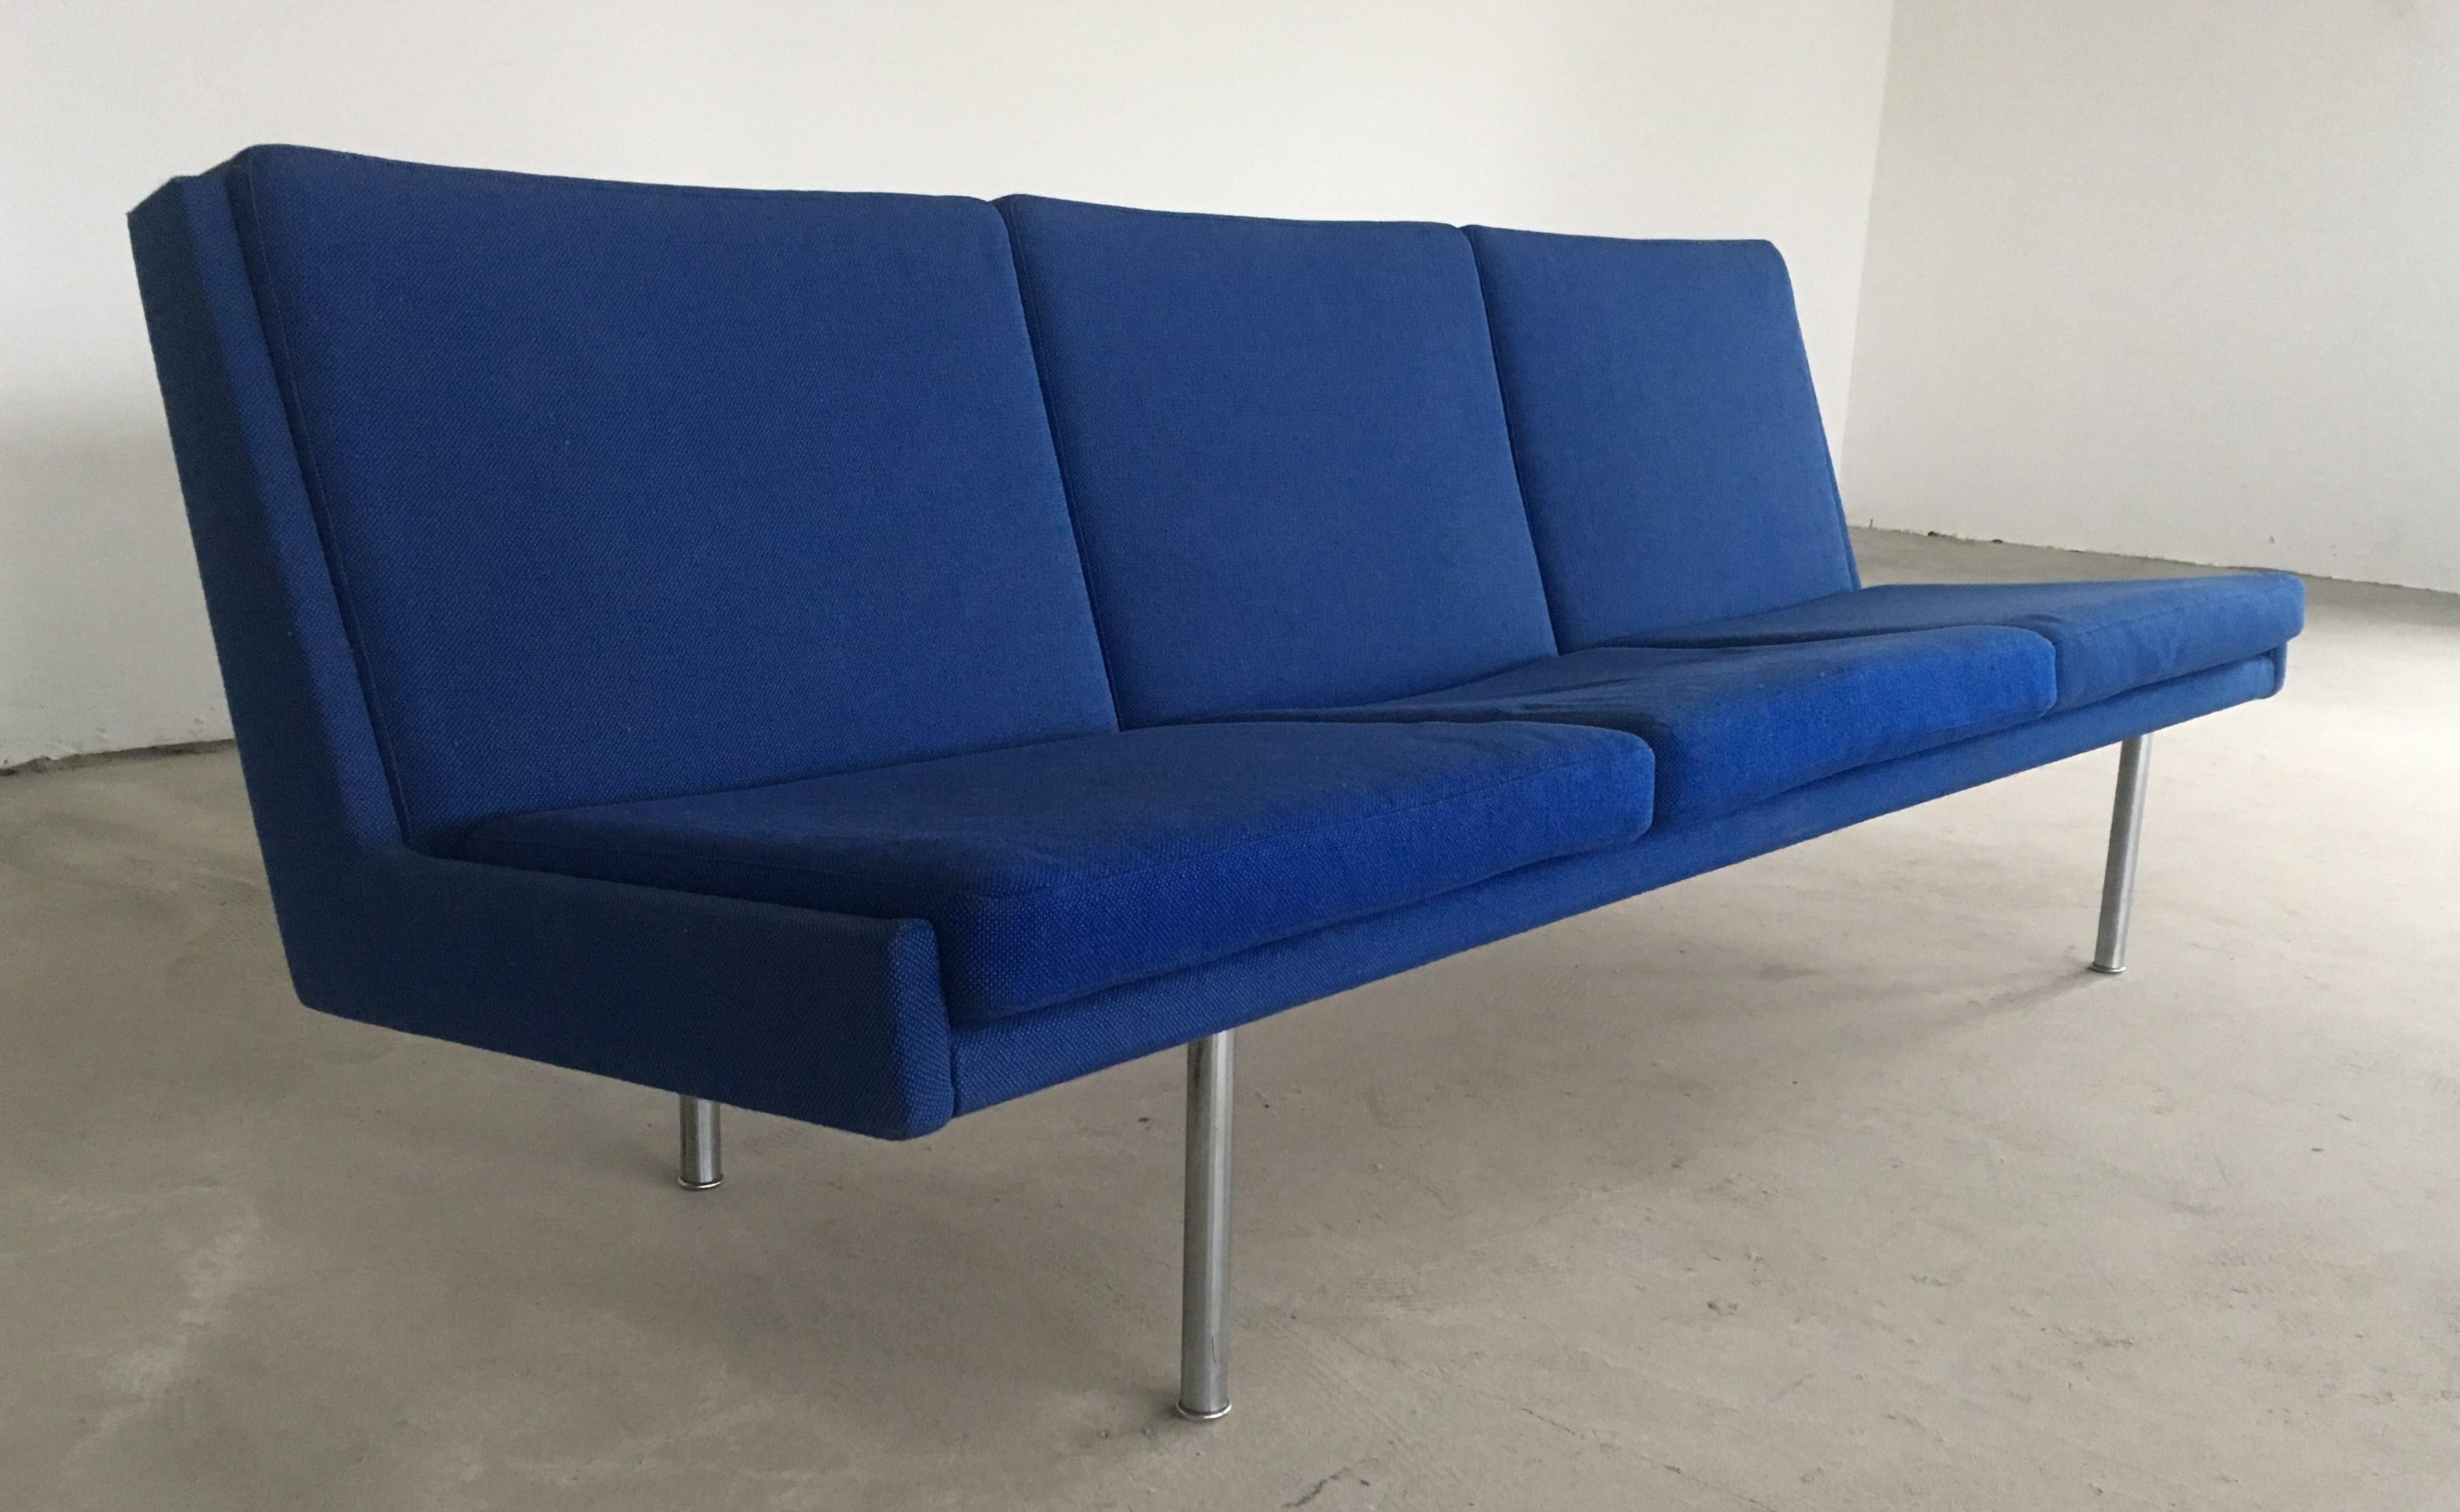 Danish 1960s Hans J. Wegner Airport Sofa in Original Blue Fabric by A.P. Stolen For Sale